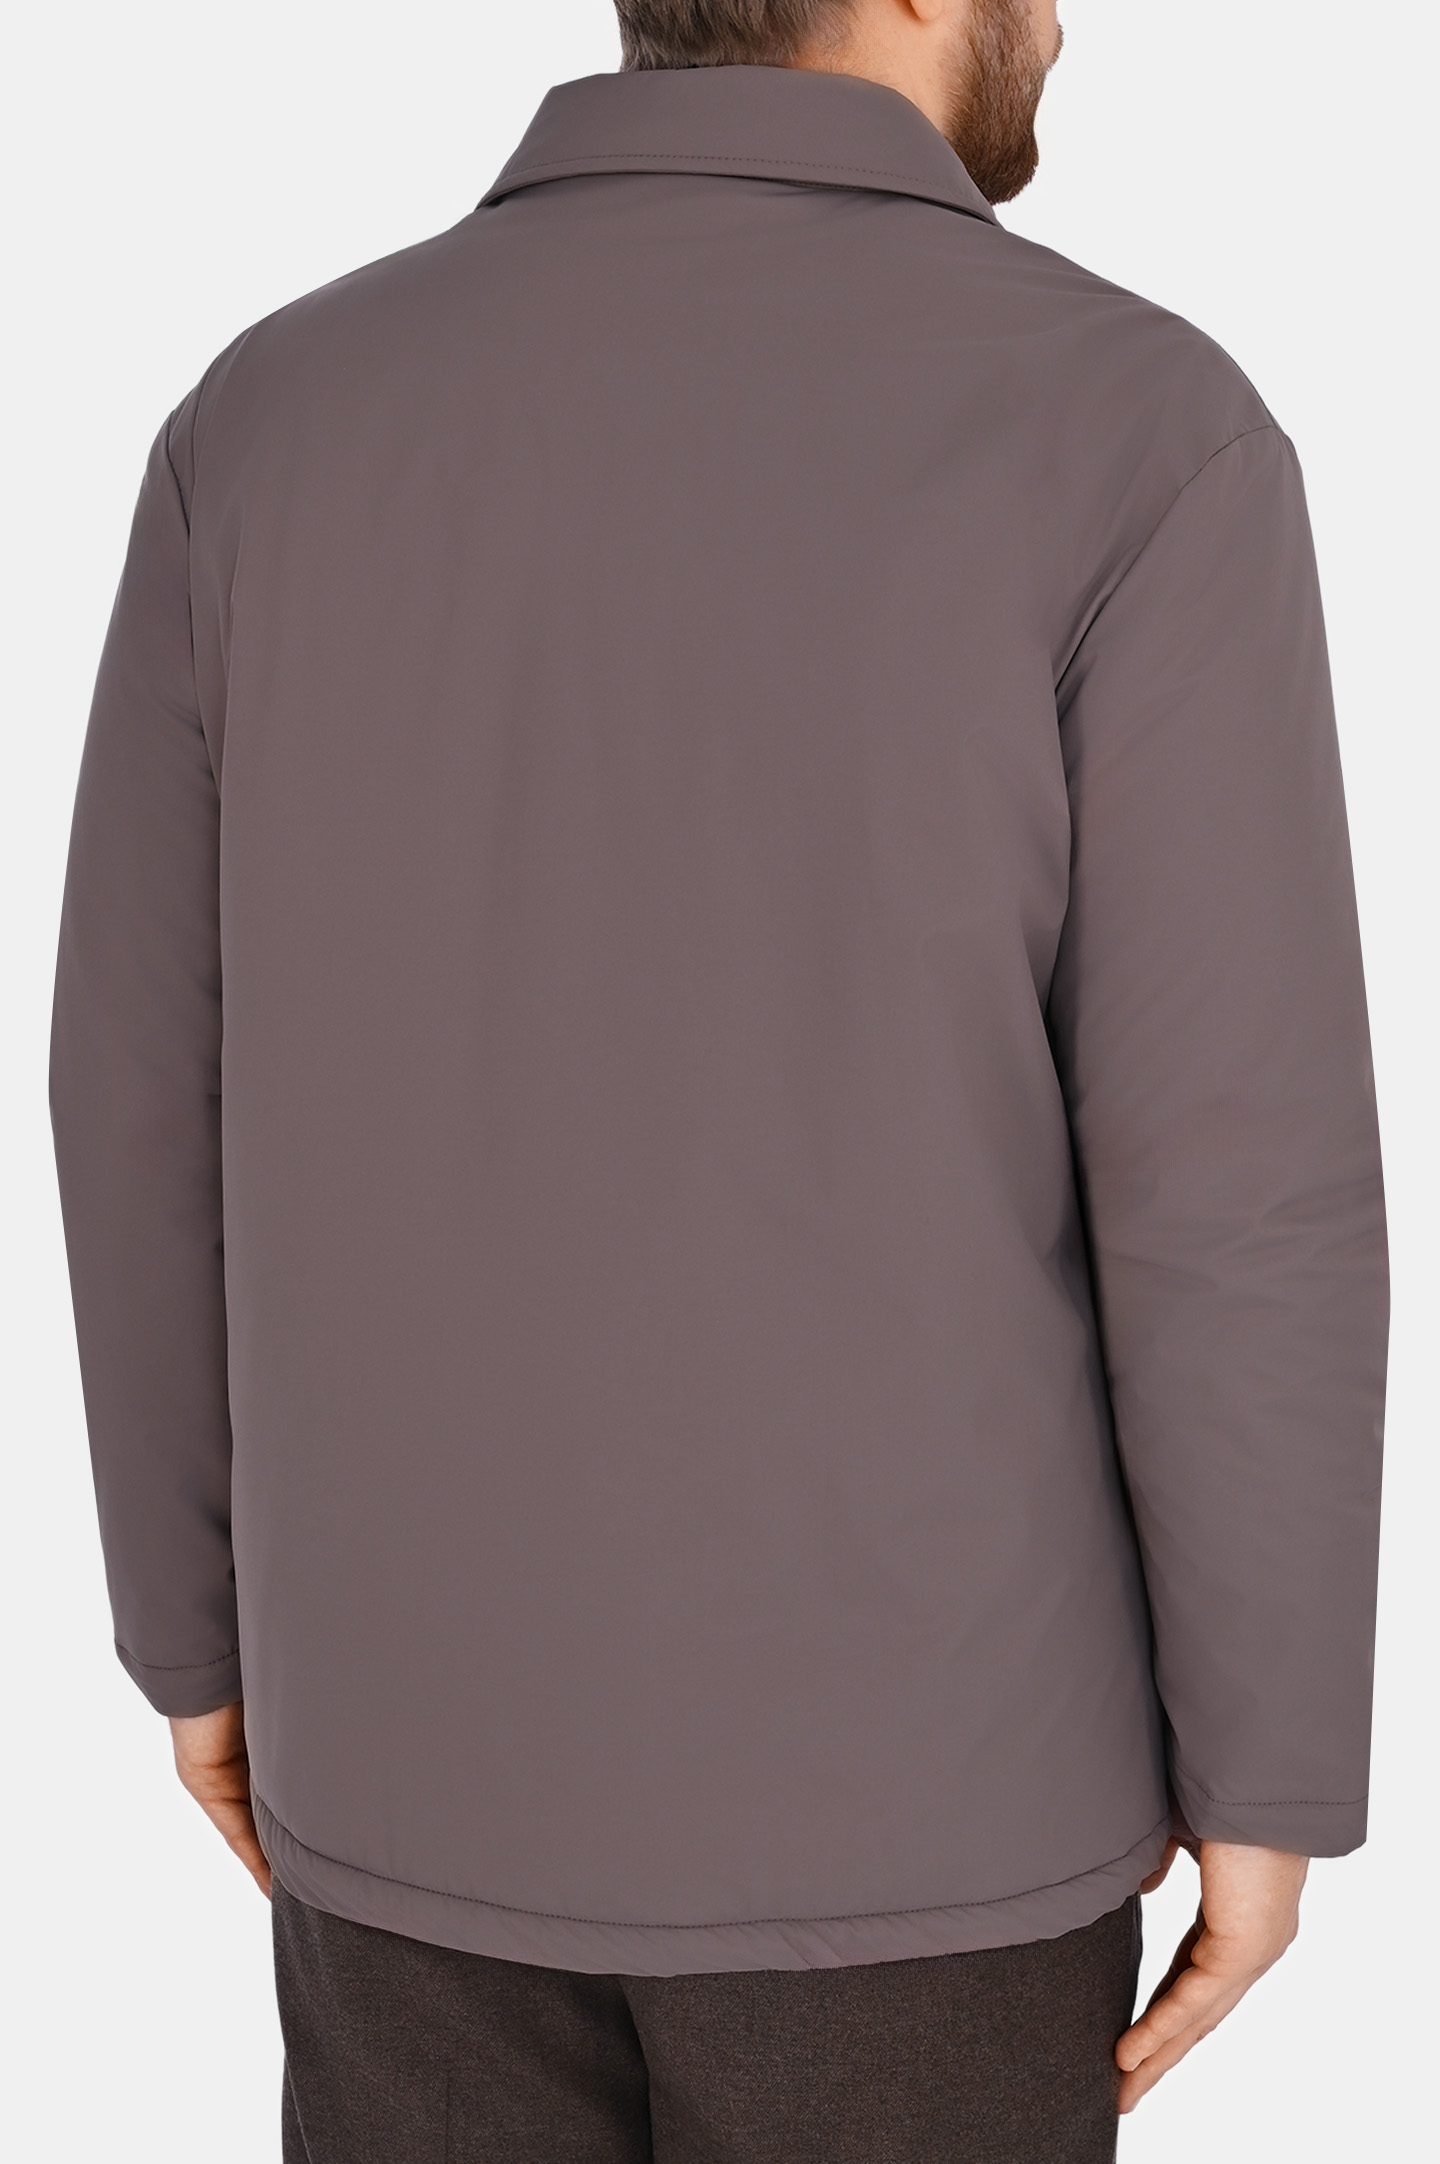 Куртка KITON UW1582YC40100, цвет: Коричневый, Мужской